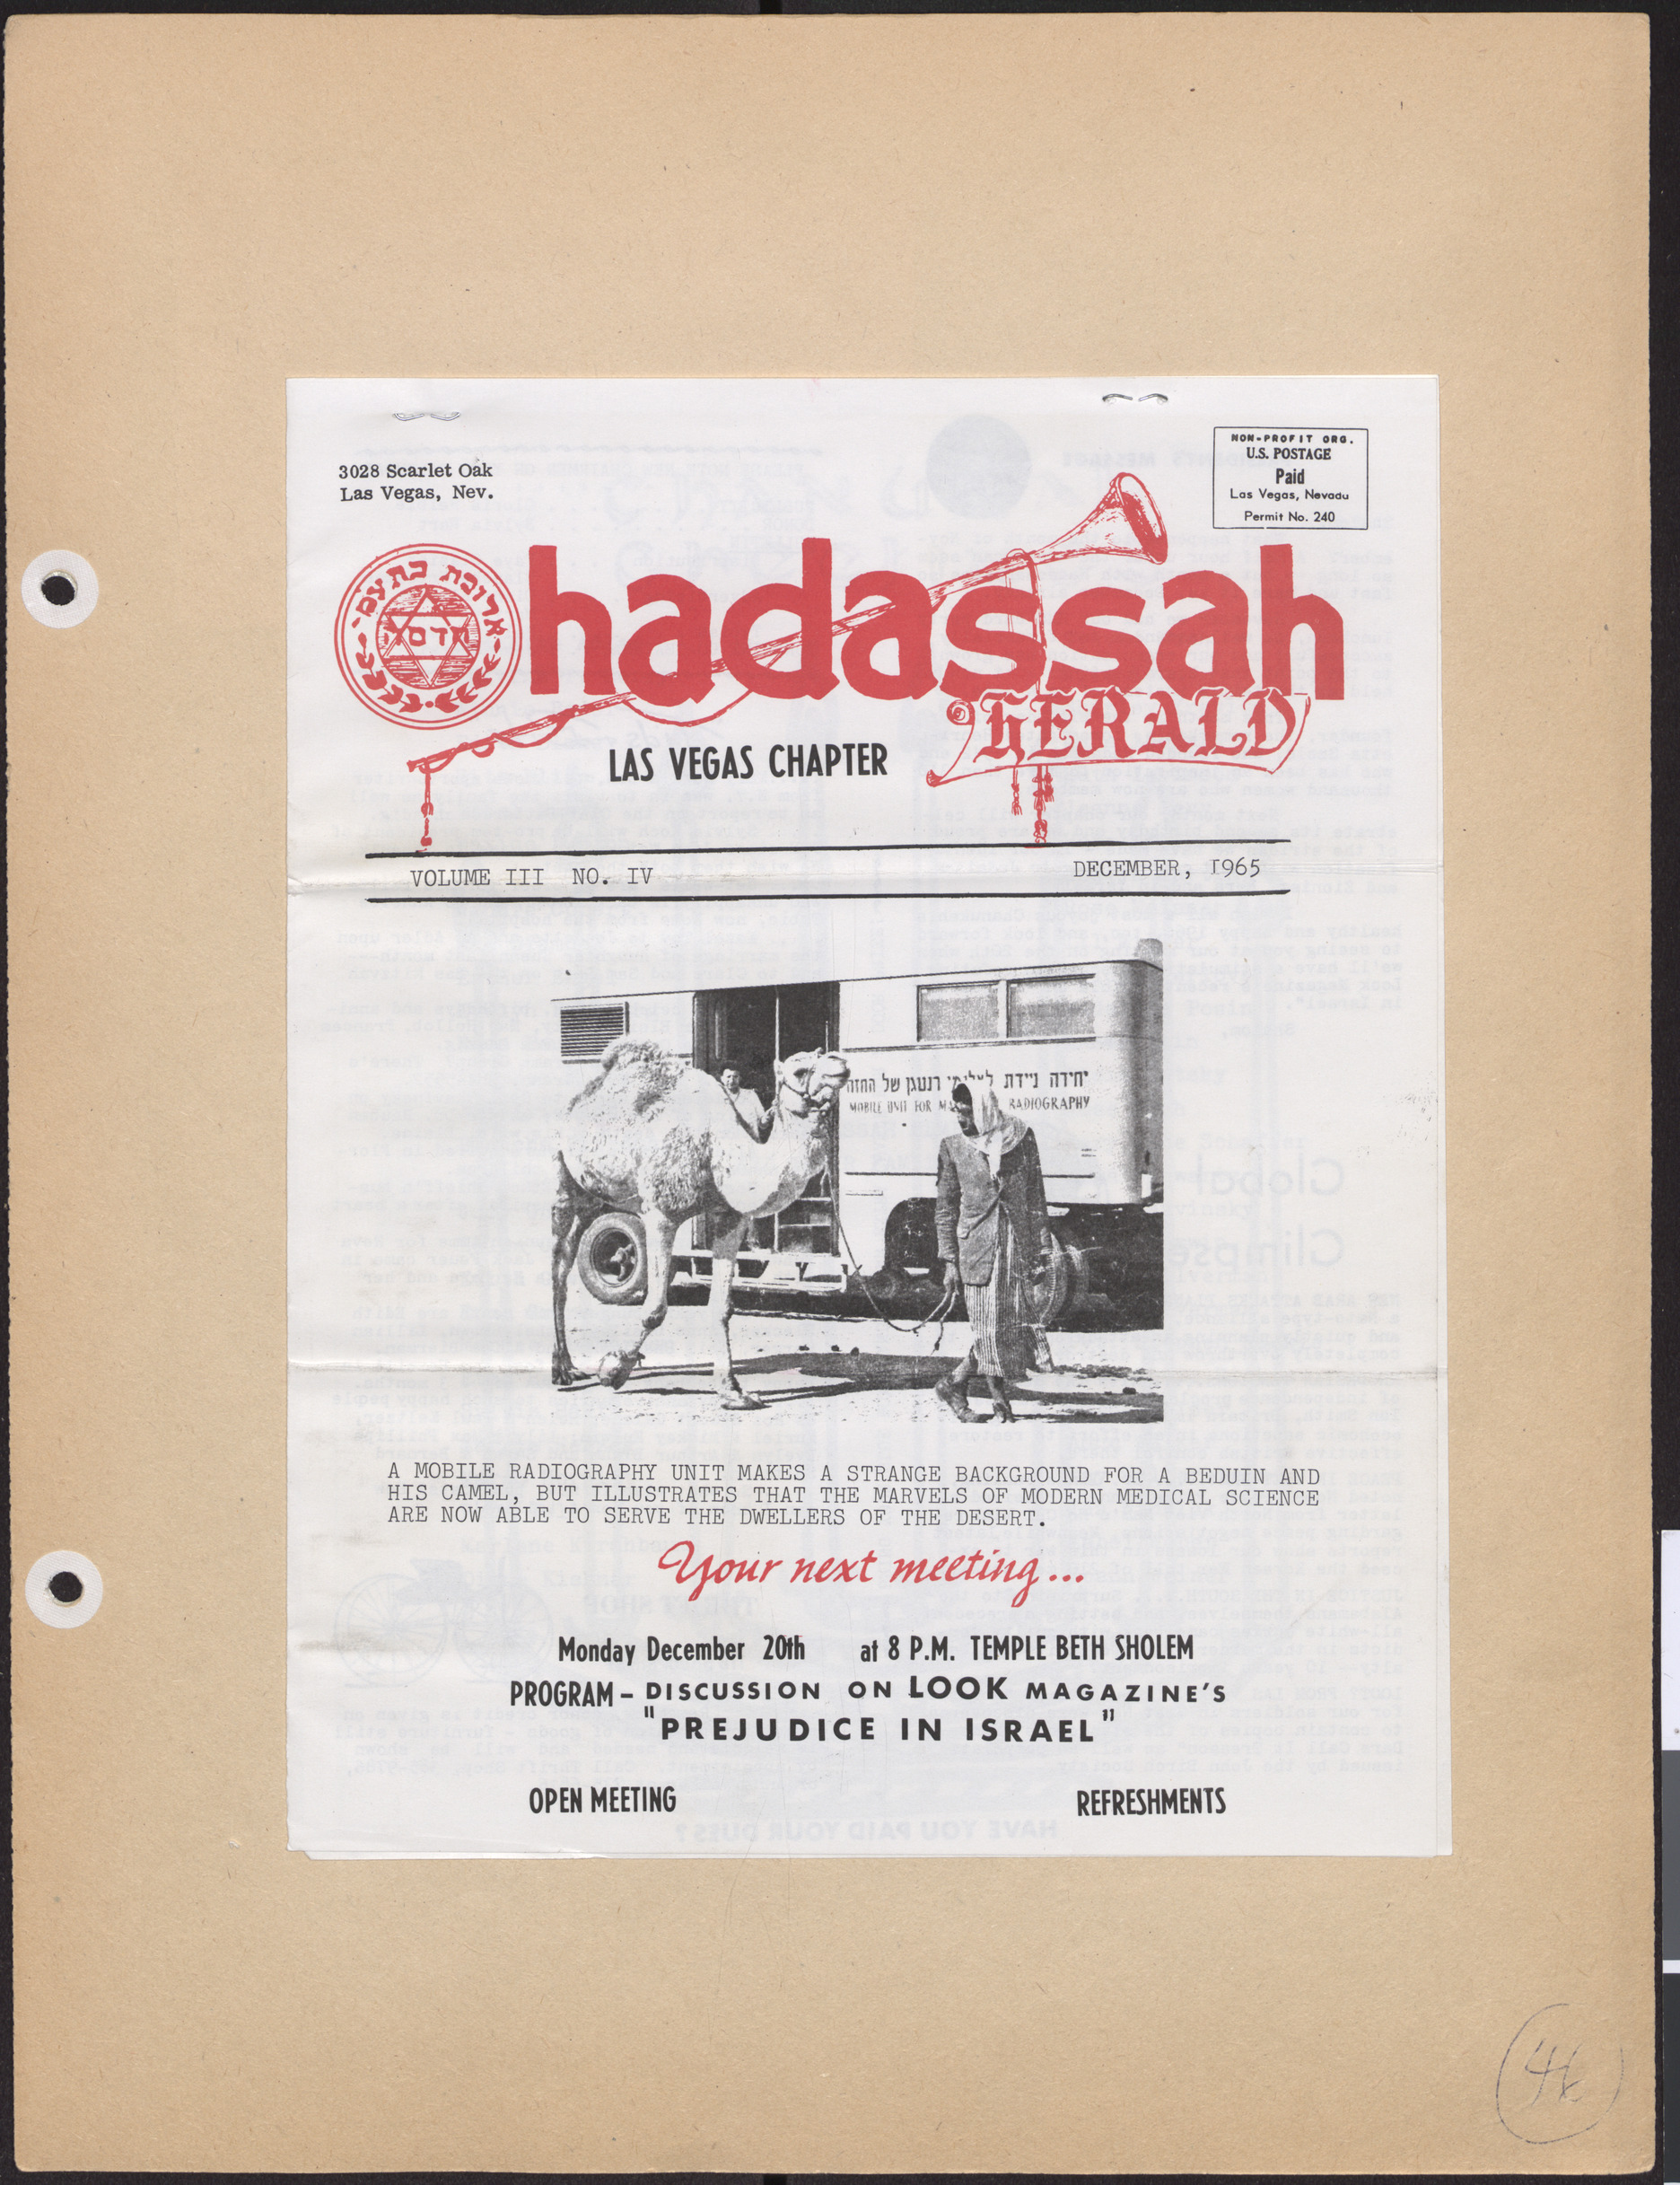 Hadassah Las Vegas Chapter newsletter, December 1965, cover